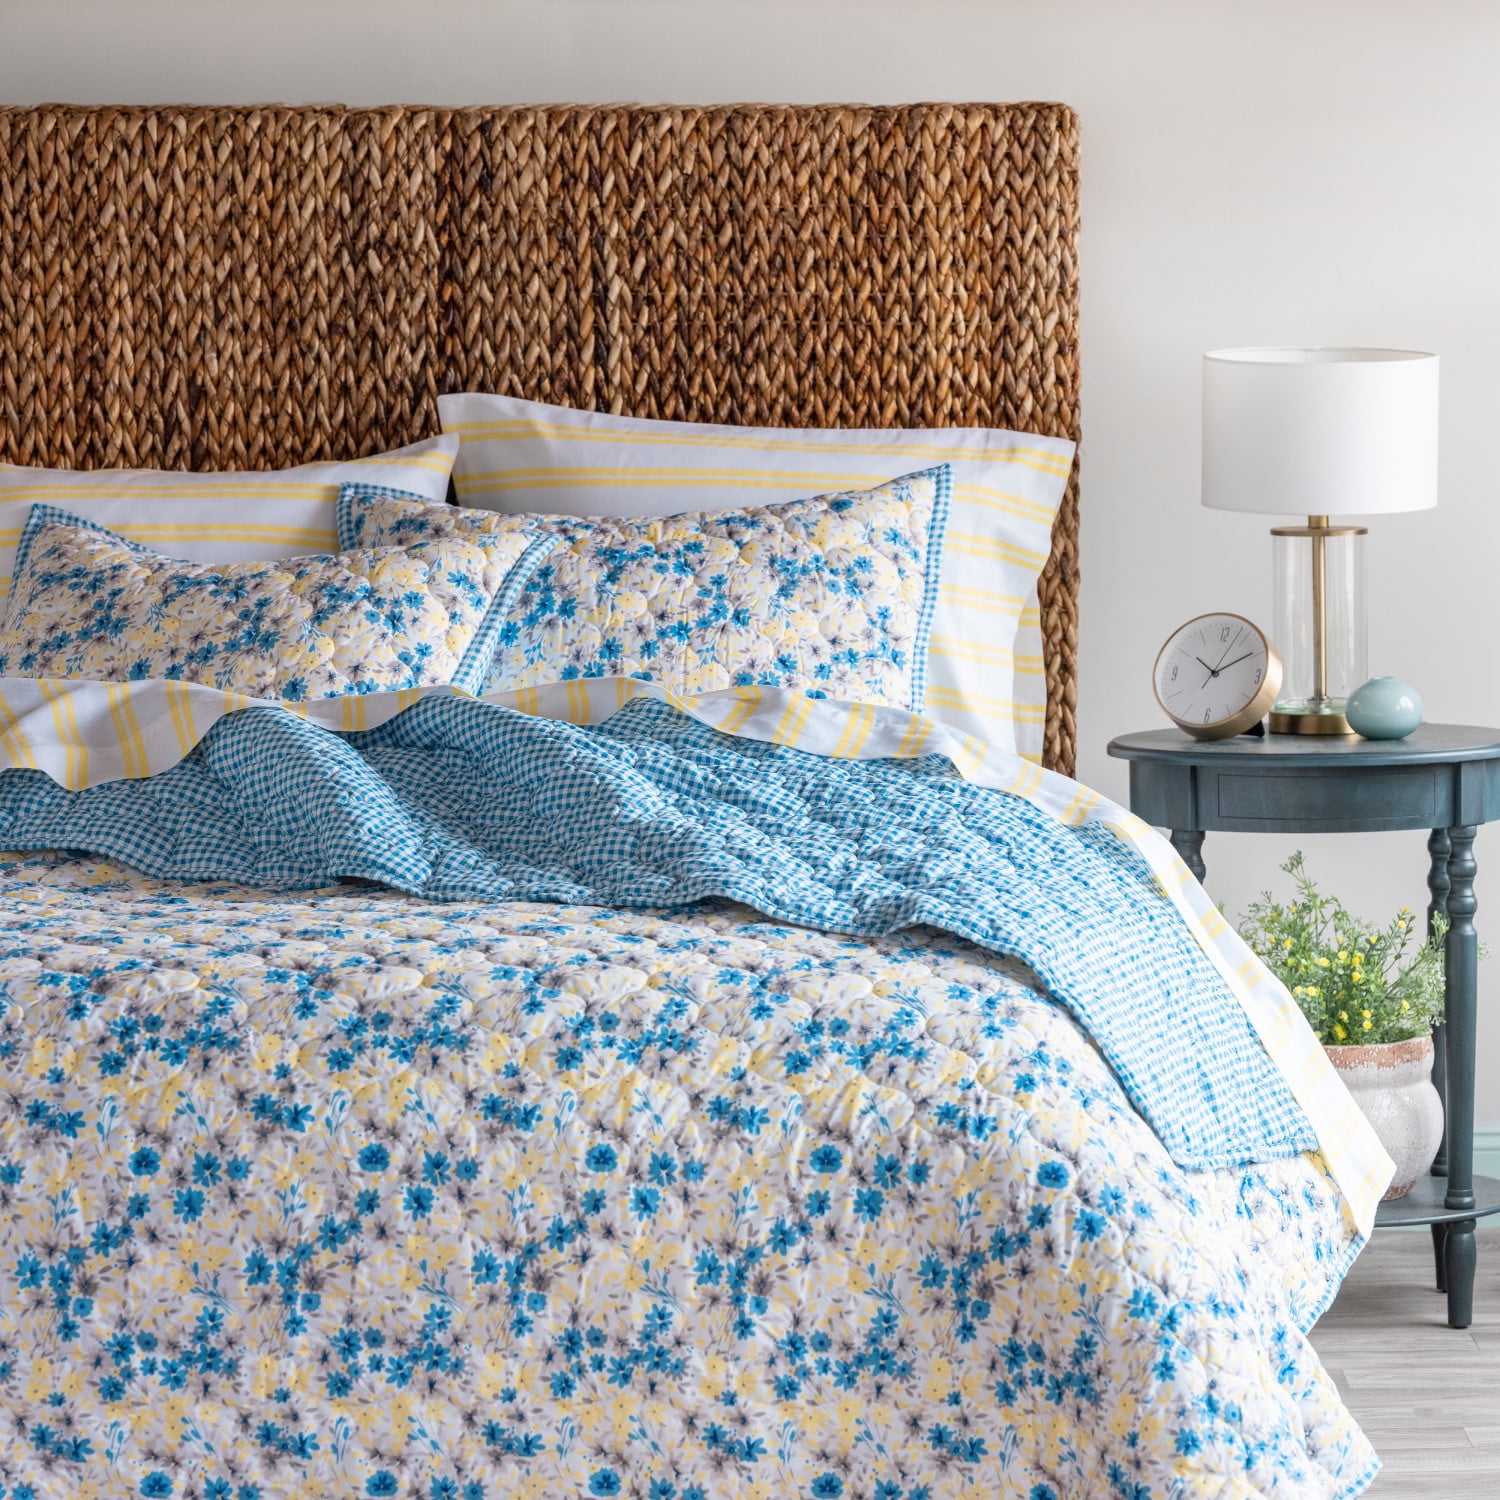 Details about   Bedsure 2-Piece Printed Quilt Set Twin Size 68x86 inches Blue Floral Patchwor 